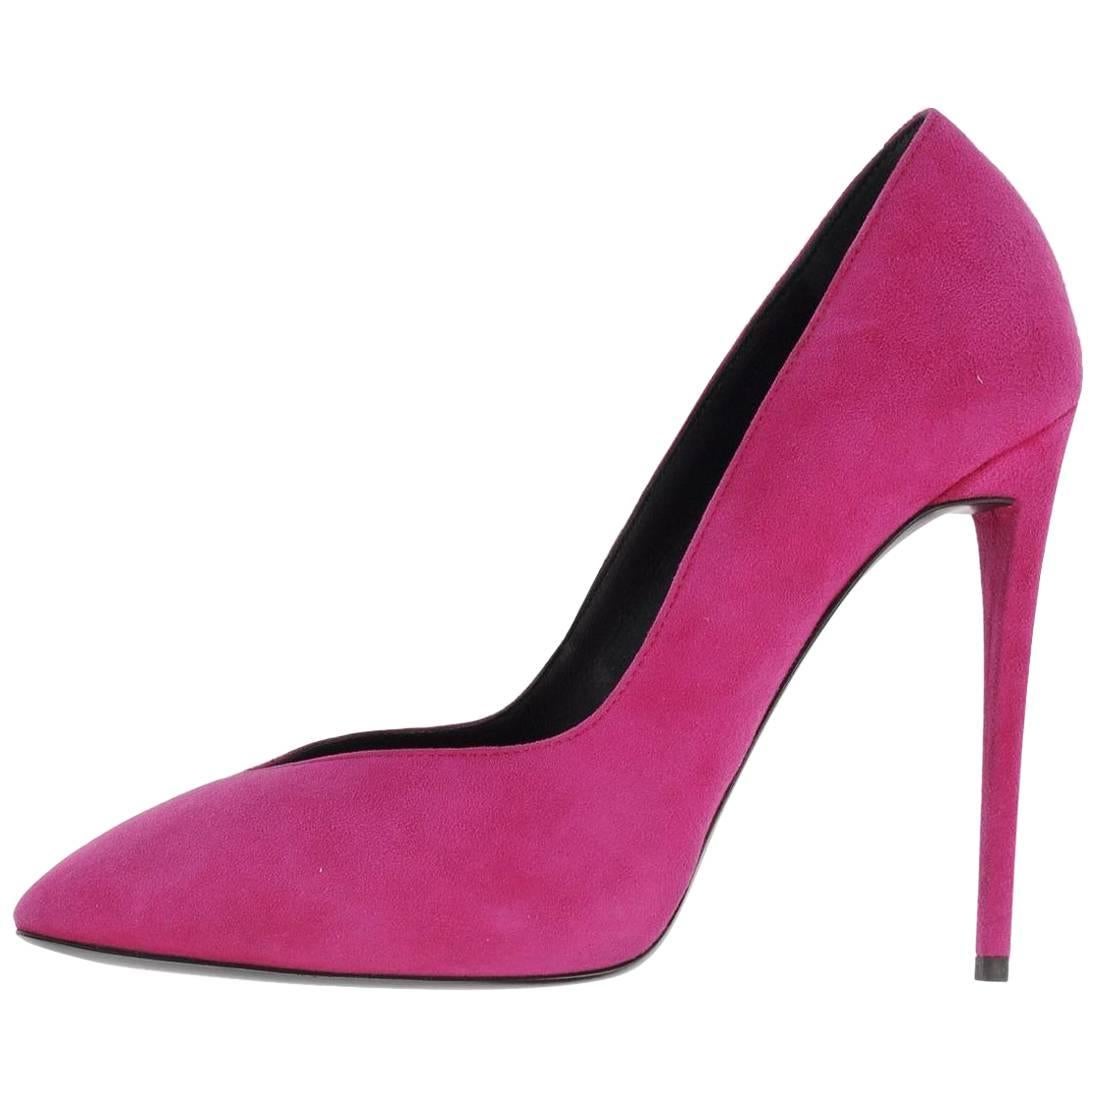 Giuseppe Zanotti New Magenta Pink Fuchsia Suede High Heels Pumps in Box